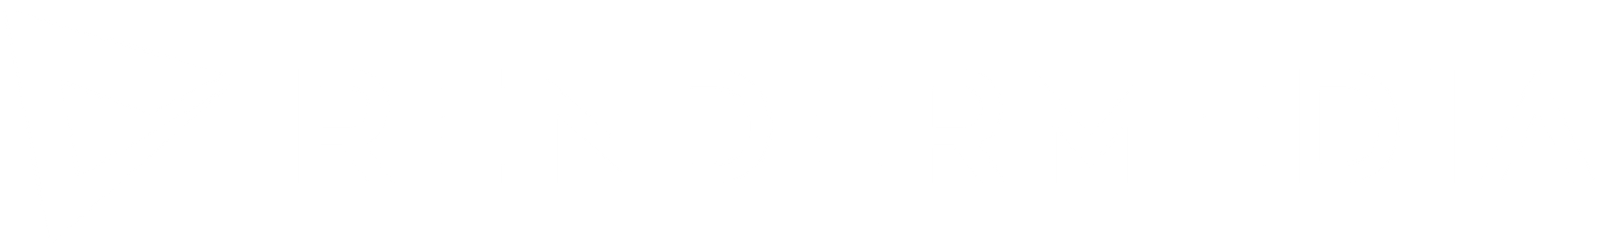 rendermedia logo